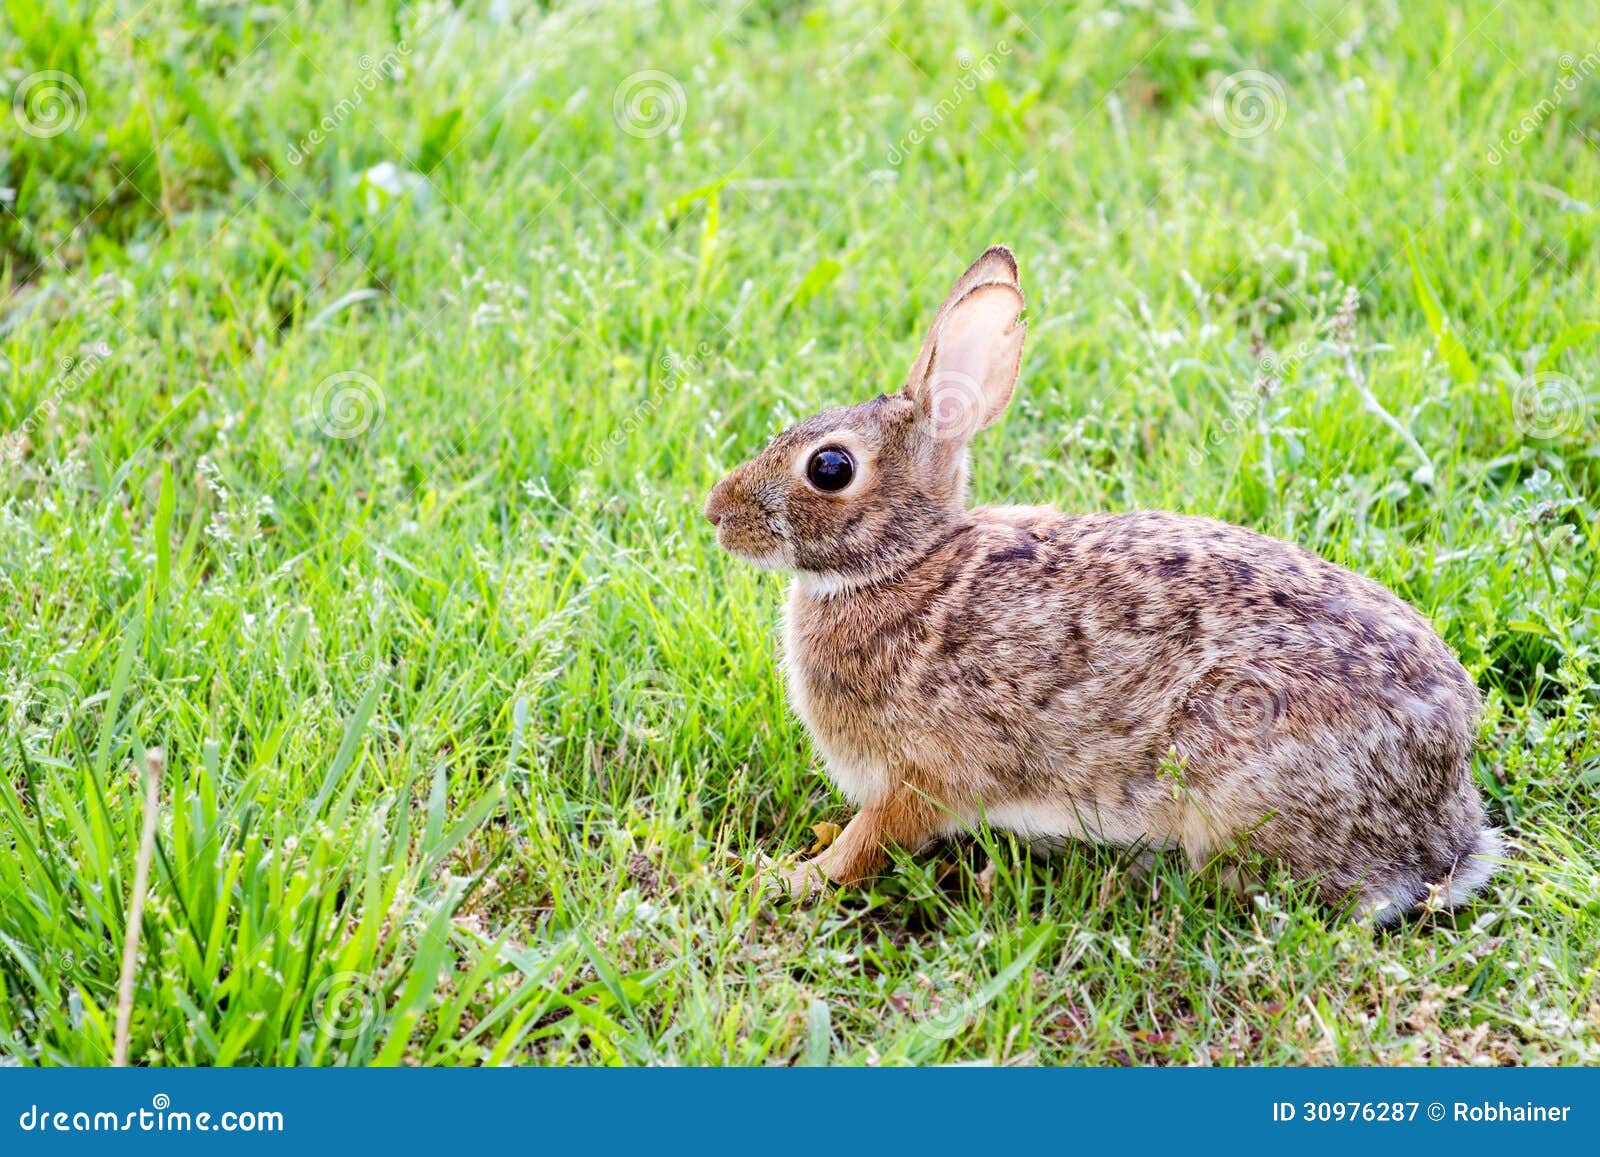 wild eastern cottontail rabbit, sylvilagus floridanus, in field